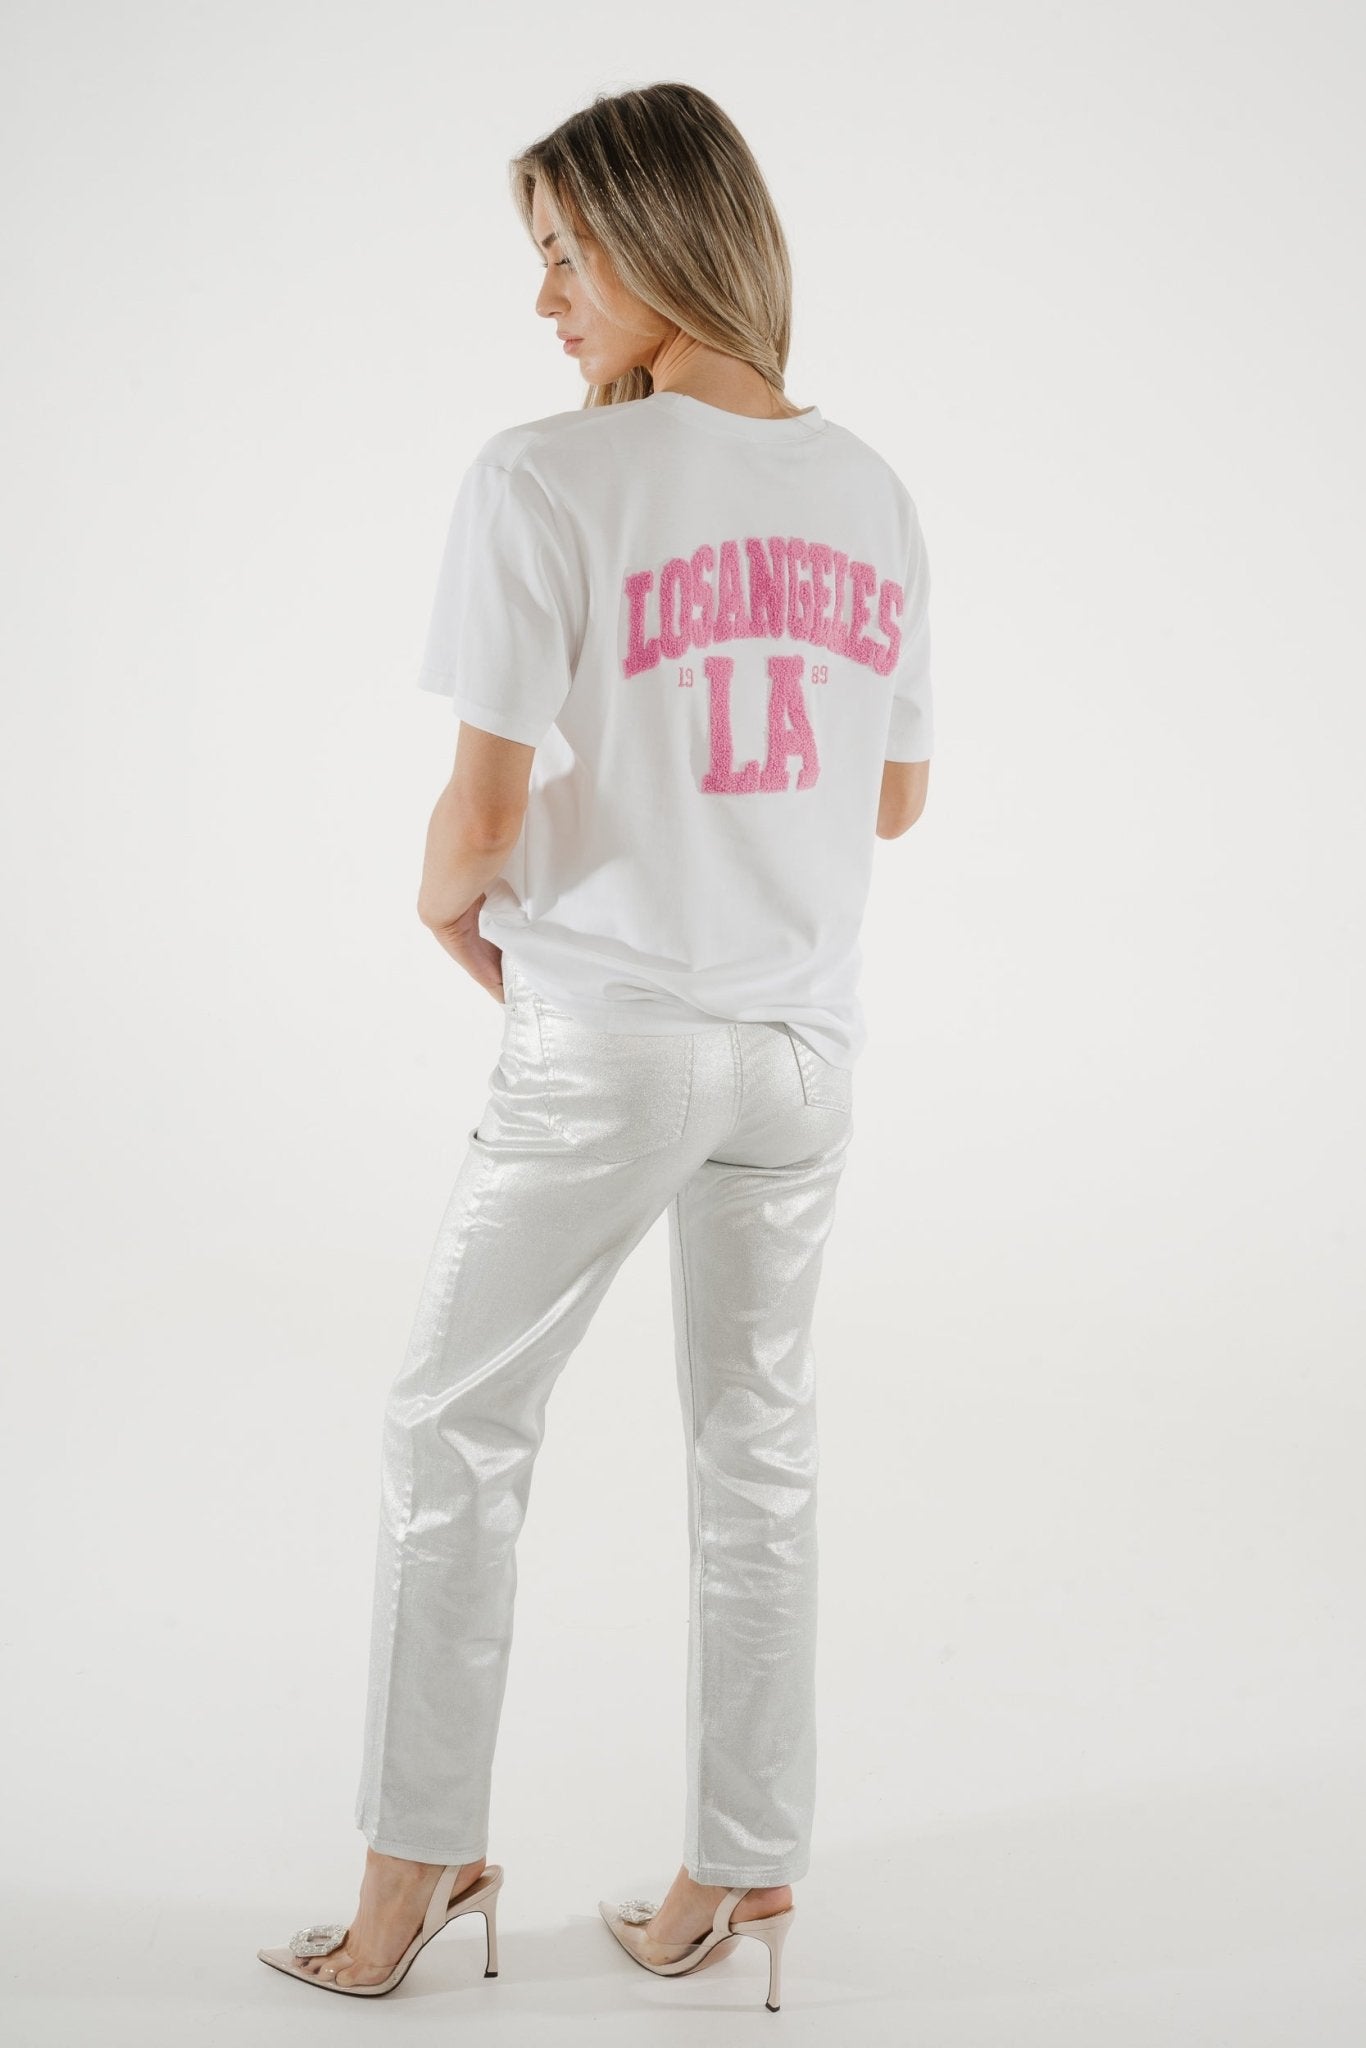 Millie LA Slogan T-Shirt In Pink - The Walk in Wardrobe